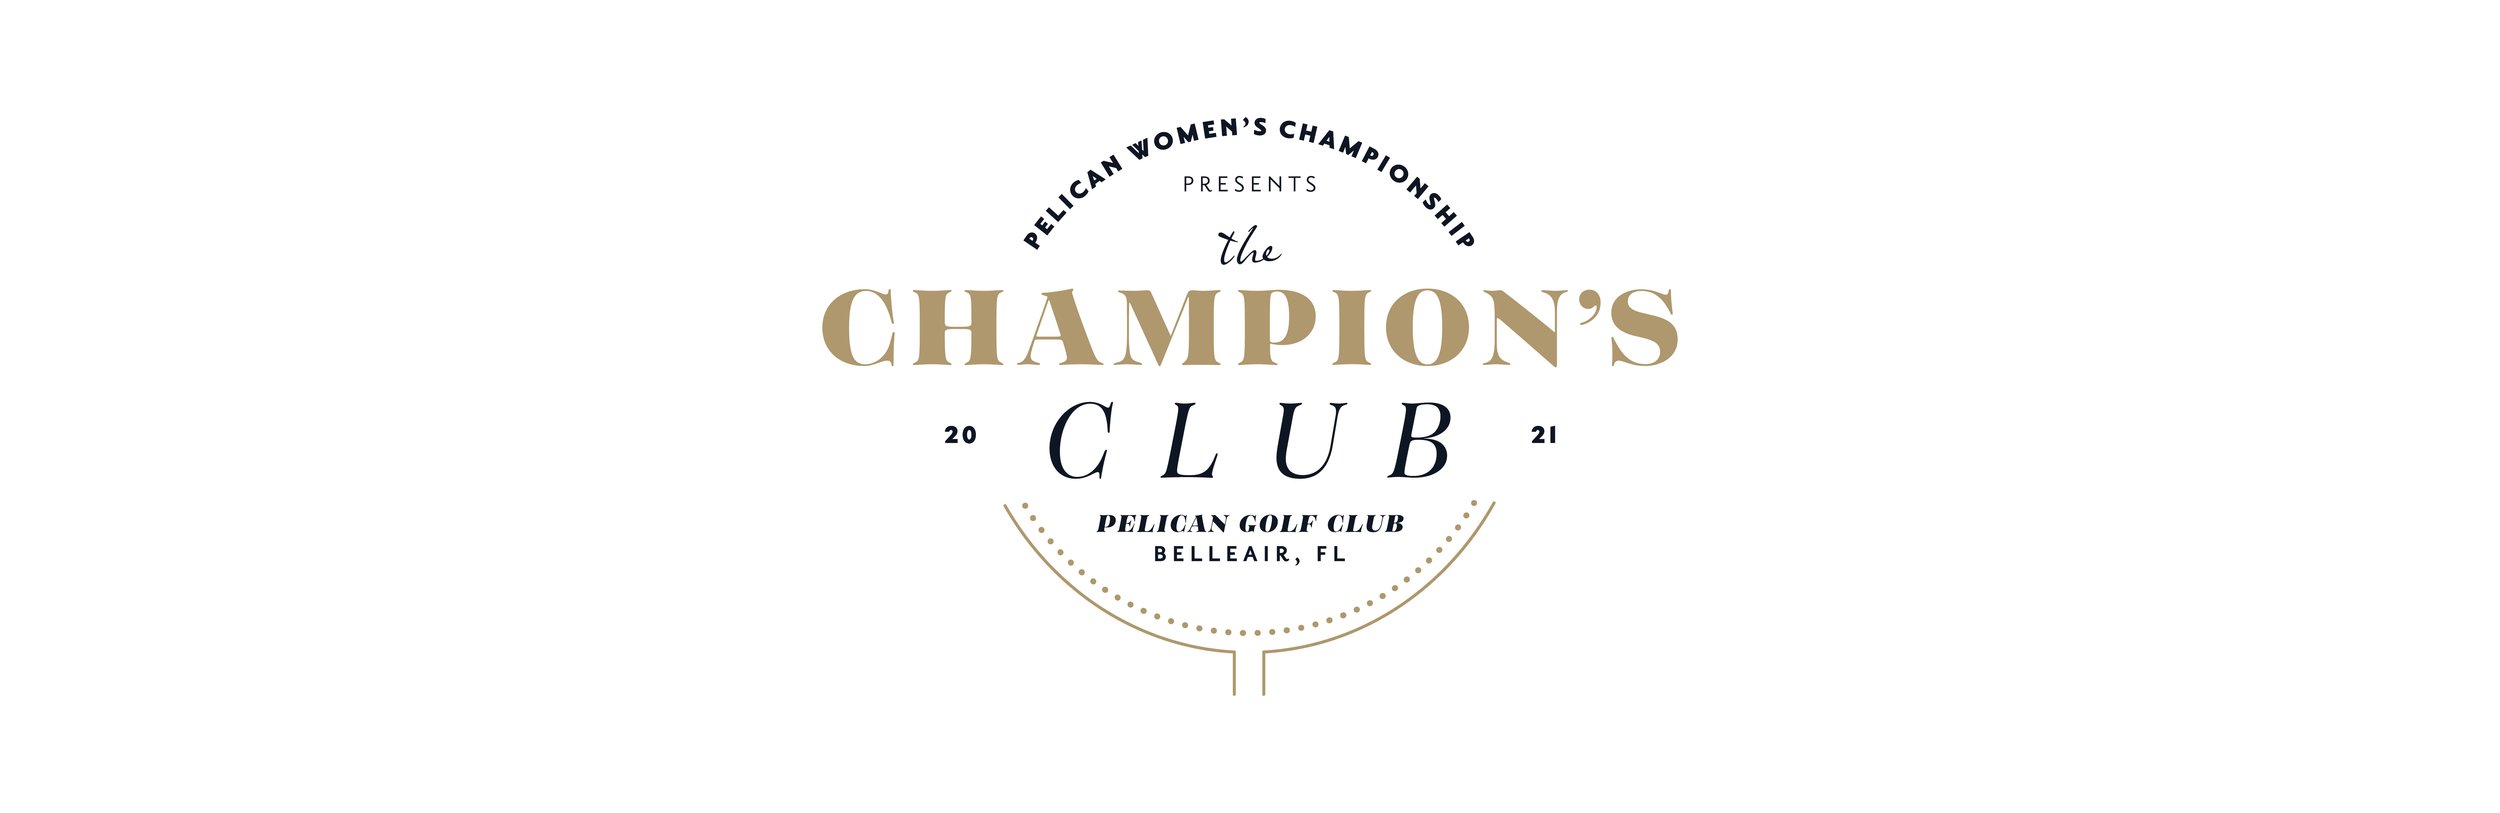  The Champions Club at Pelican Golf Club Pelican Women's Championship logo. 